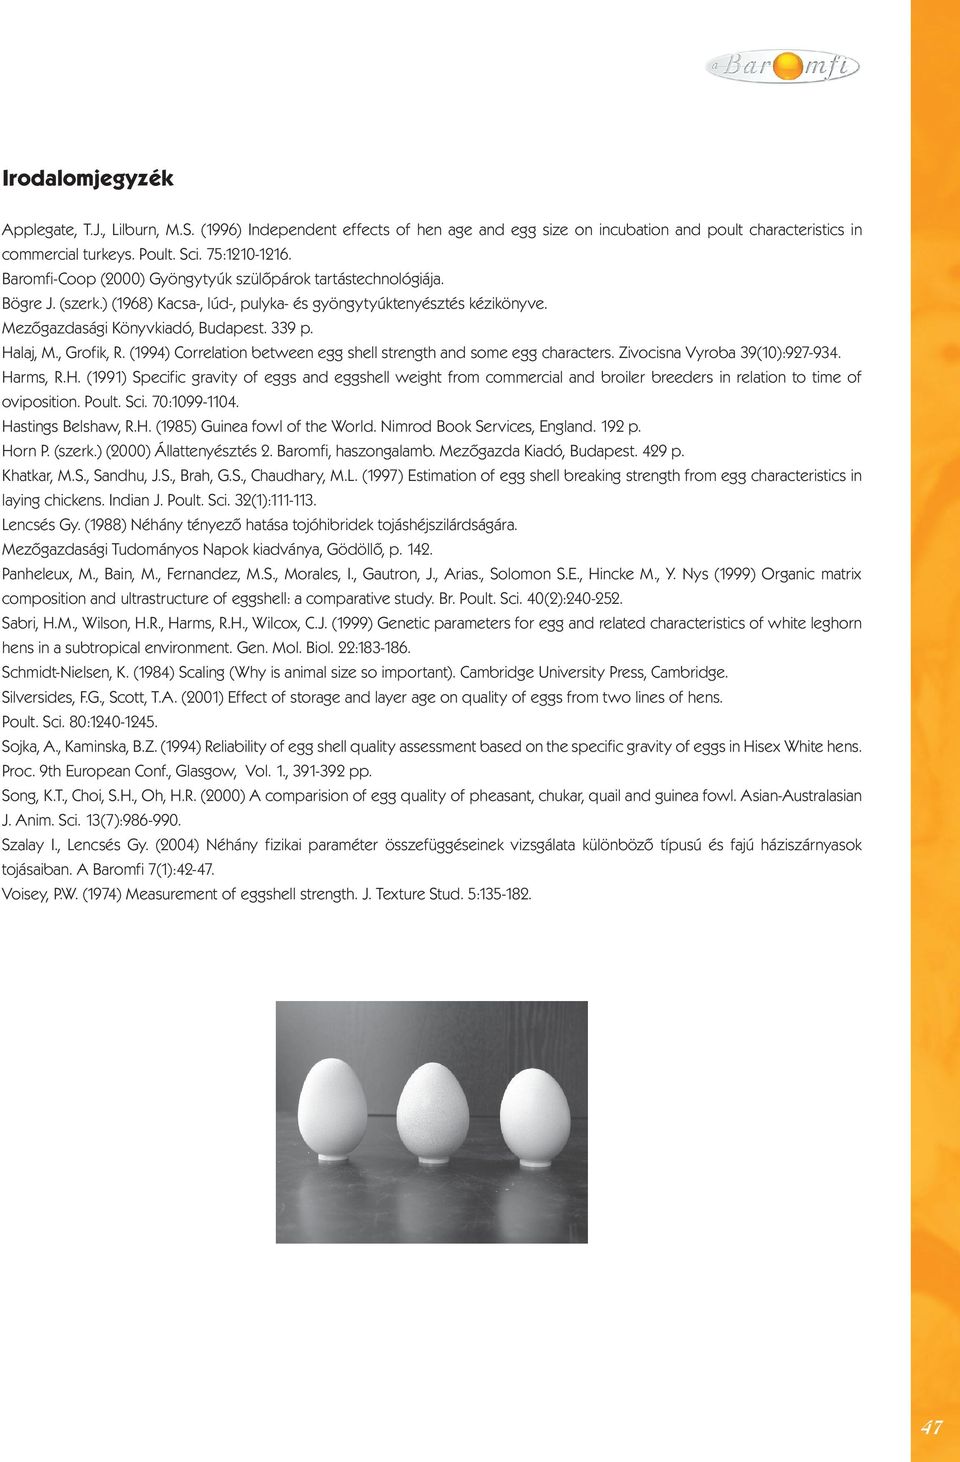 , Grofik, R. (1994) Correlation between egg shell strength and some egg characters. Zivocisna Vyroba 39(10):927-934. Ha